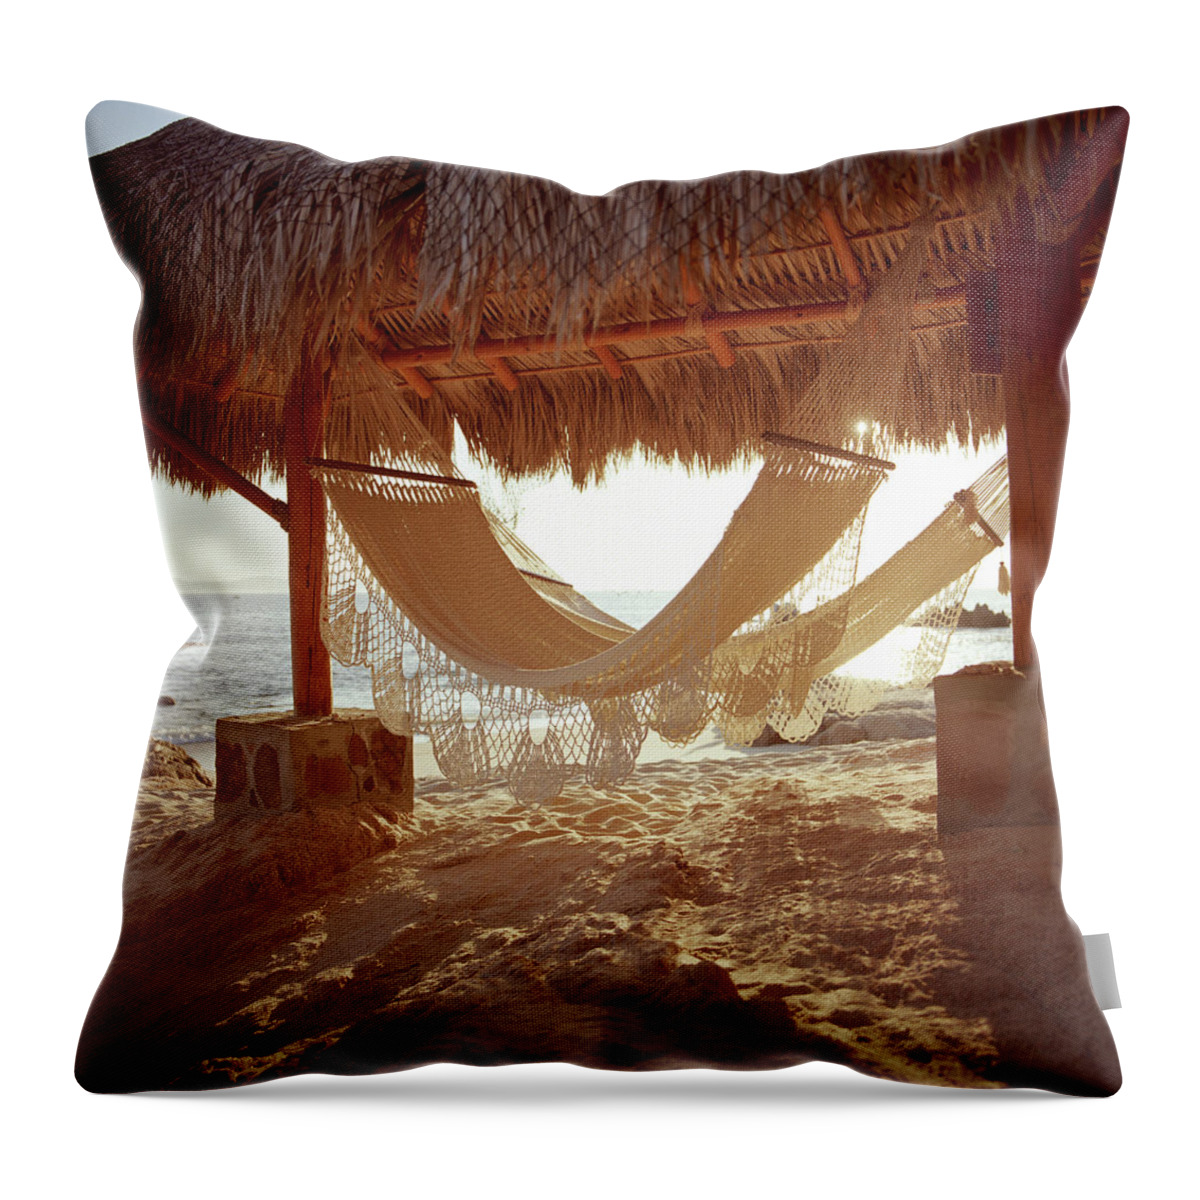 Beach Hut Throw Pillow featuring the photograph Hammocks In Beach Hut by Paul Taylor